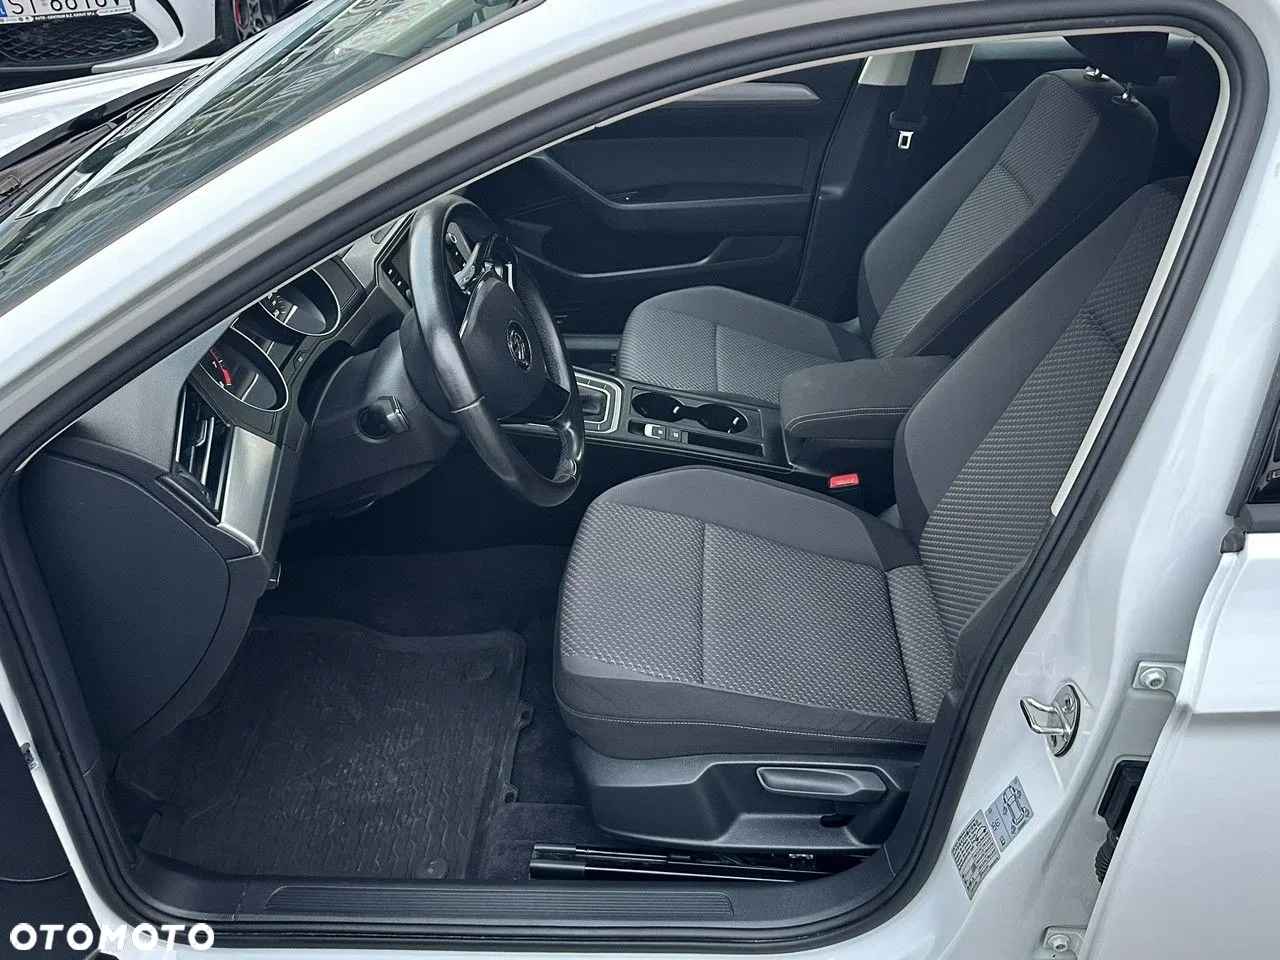 Volkswagen Passat 1.4 TSI ACT Trendline DSG 2018  103708 km Benzyna Tychy - zdjęcie 7